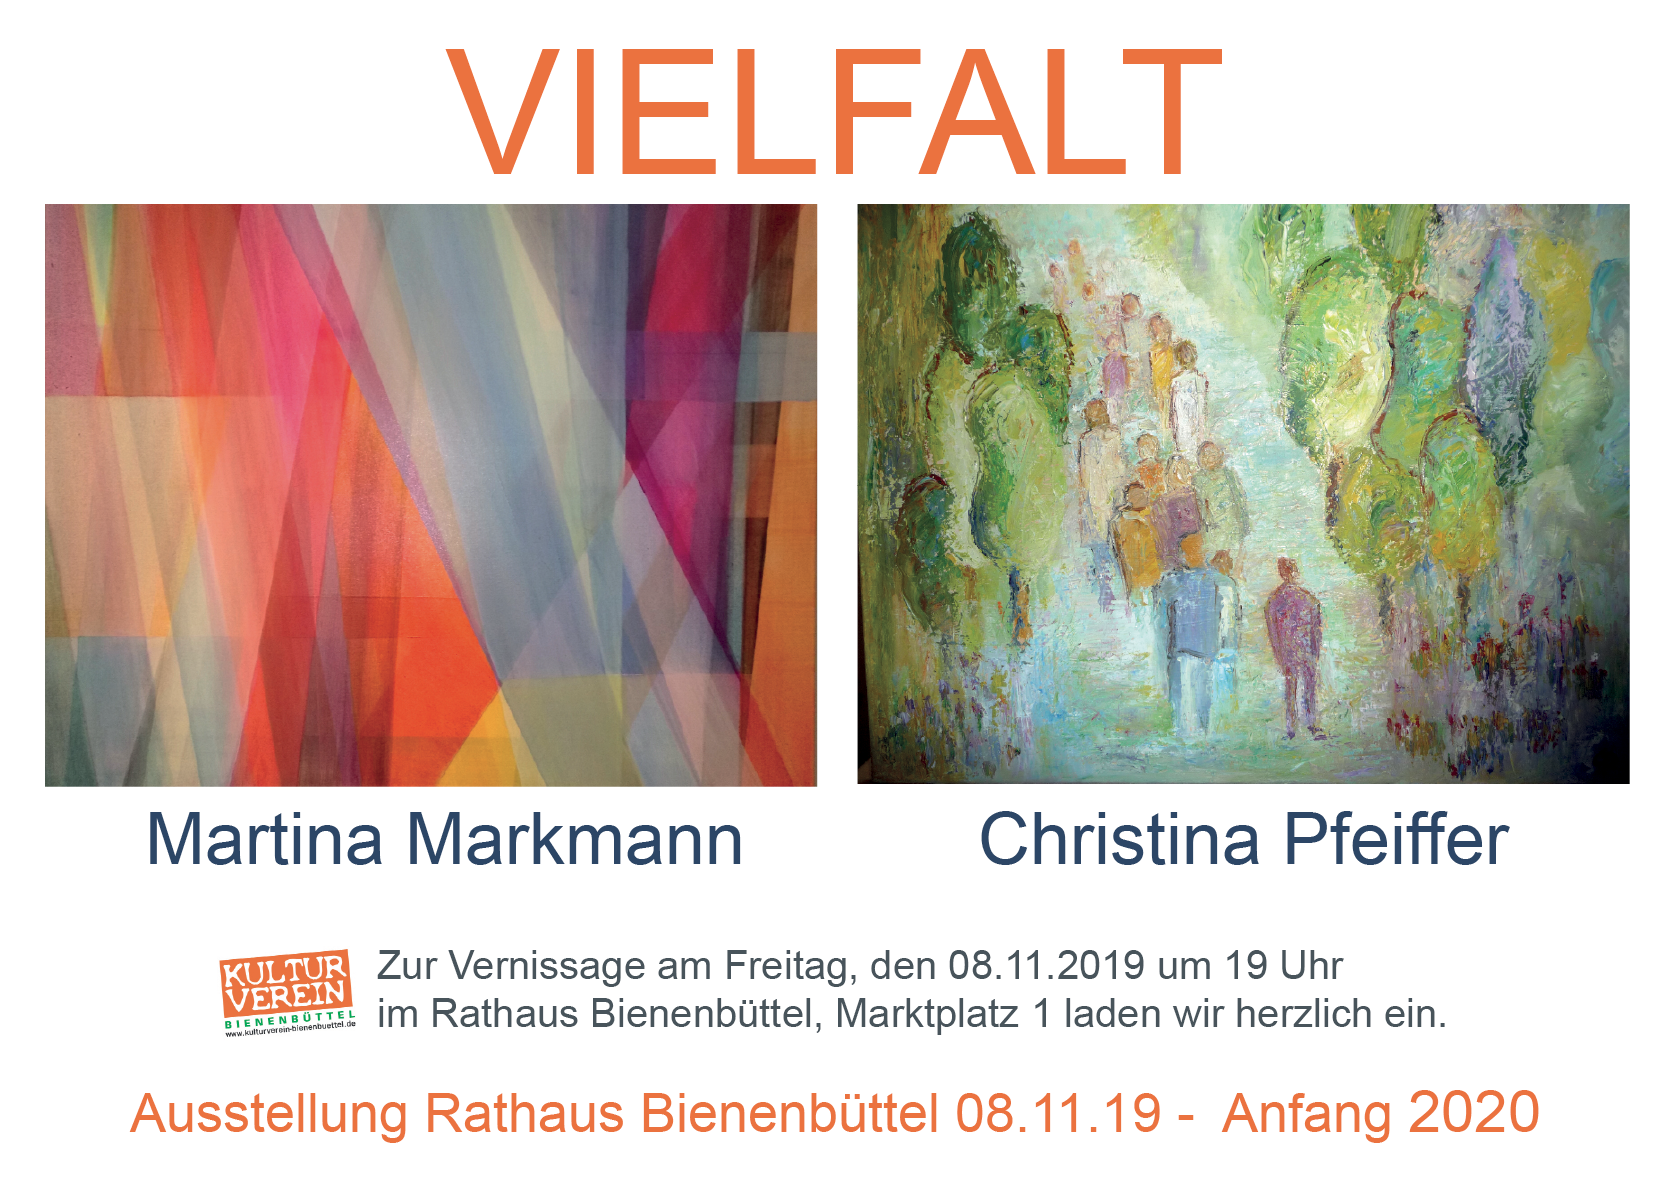 Martina Markmann und Christina Pfeiffer – Vielfalt